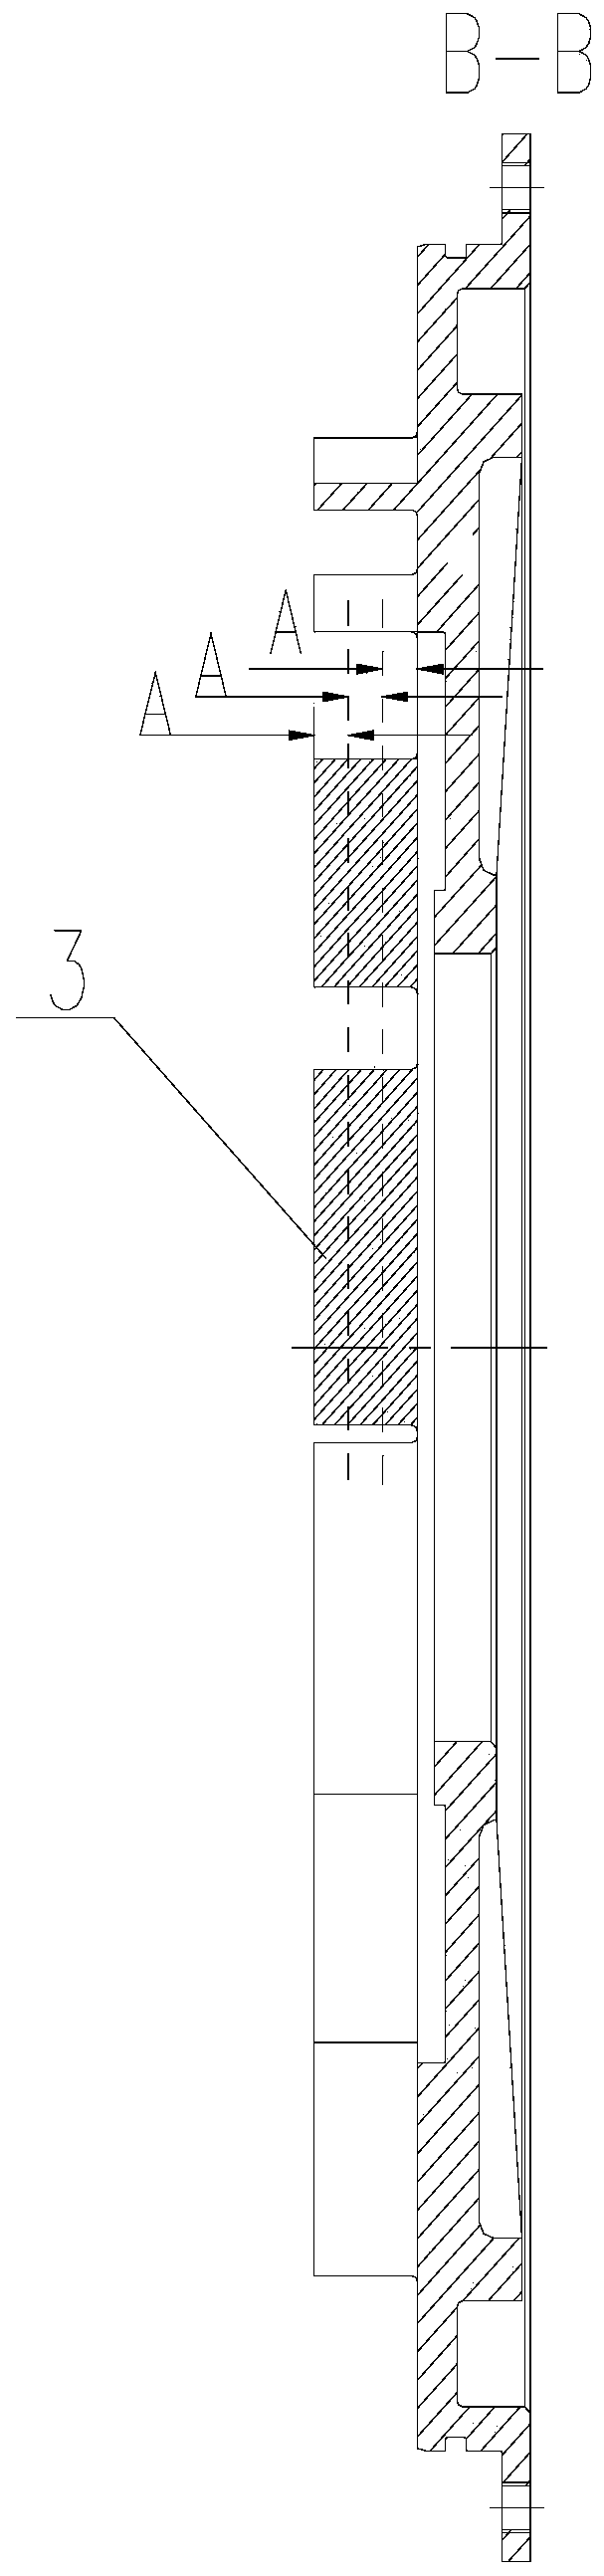 Milling method of diffuser